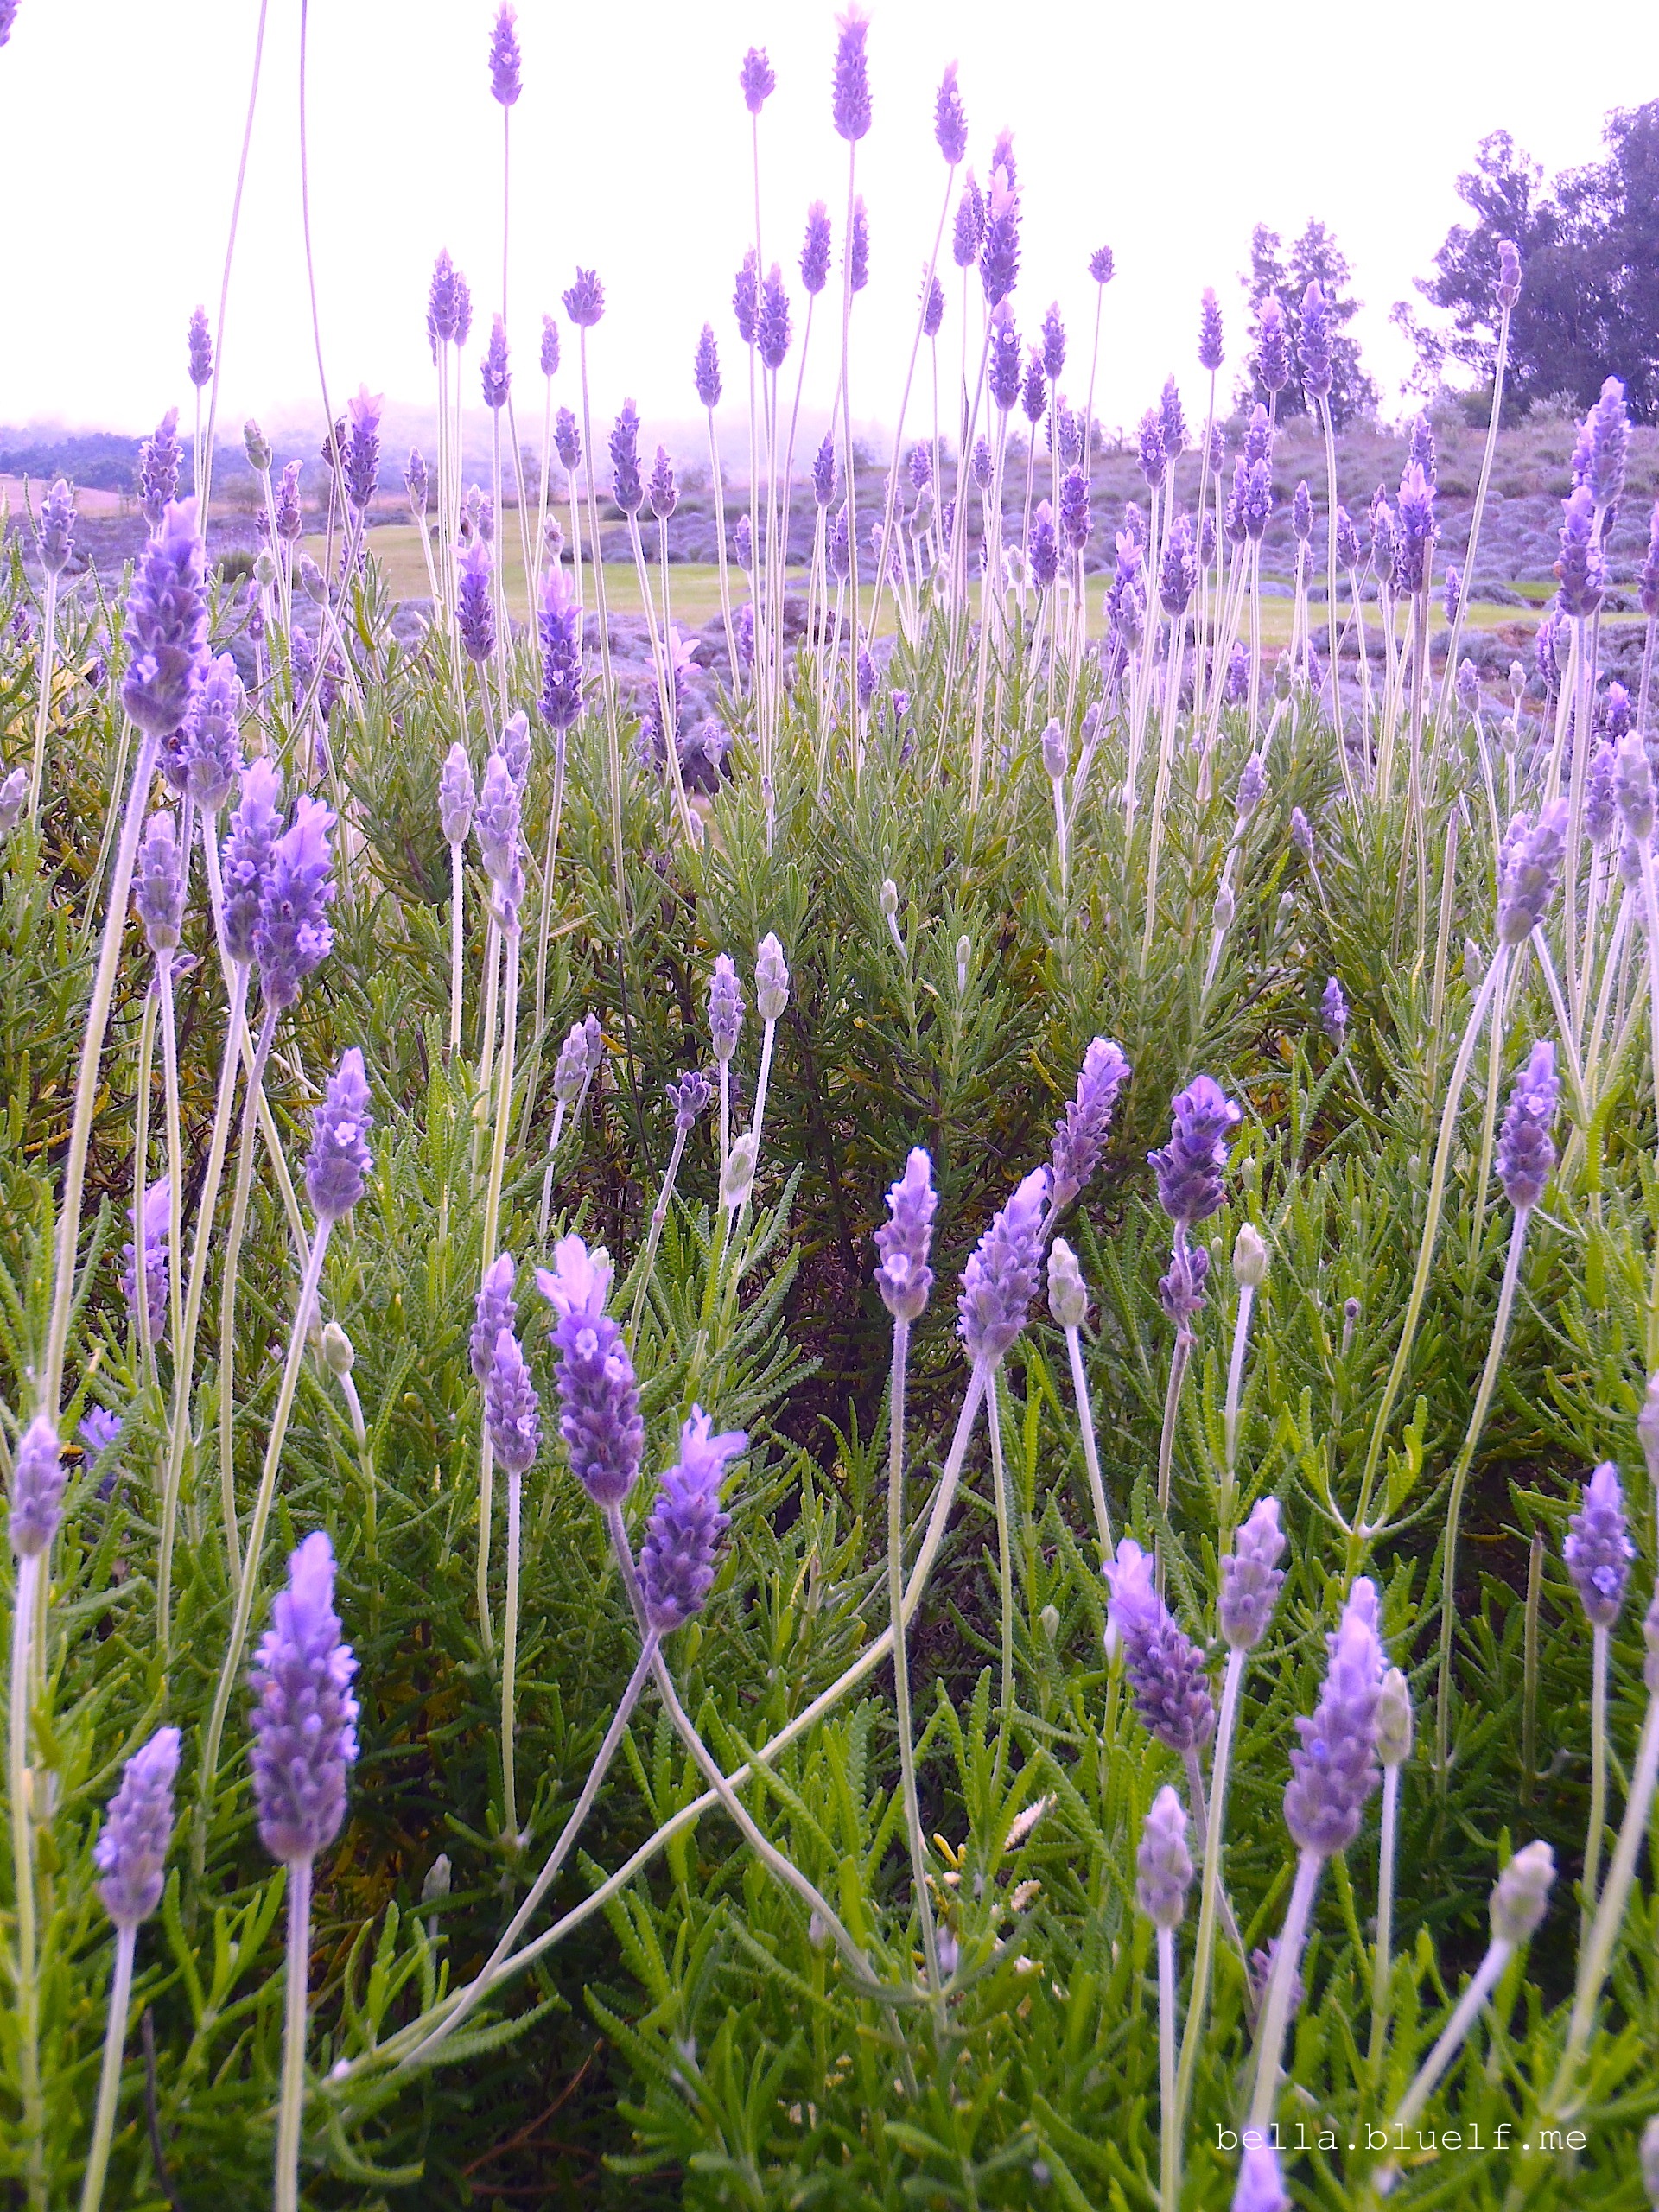 Lavender Fields 2015 - photo 3 by Rhônya Holman for bella.bluelf.me